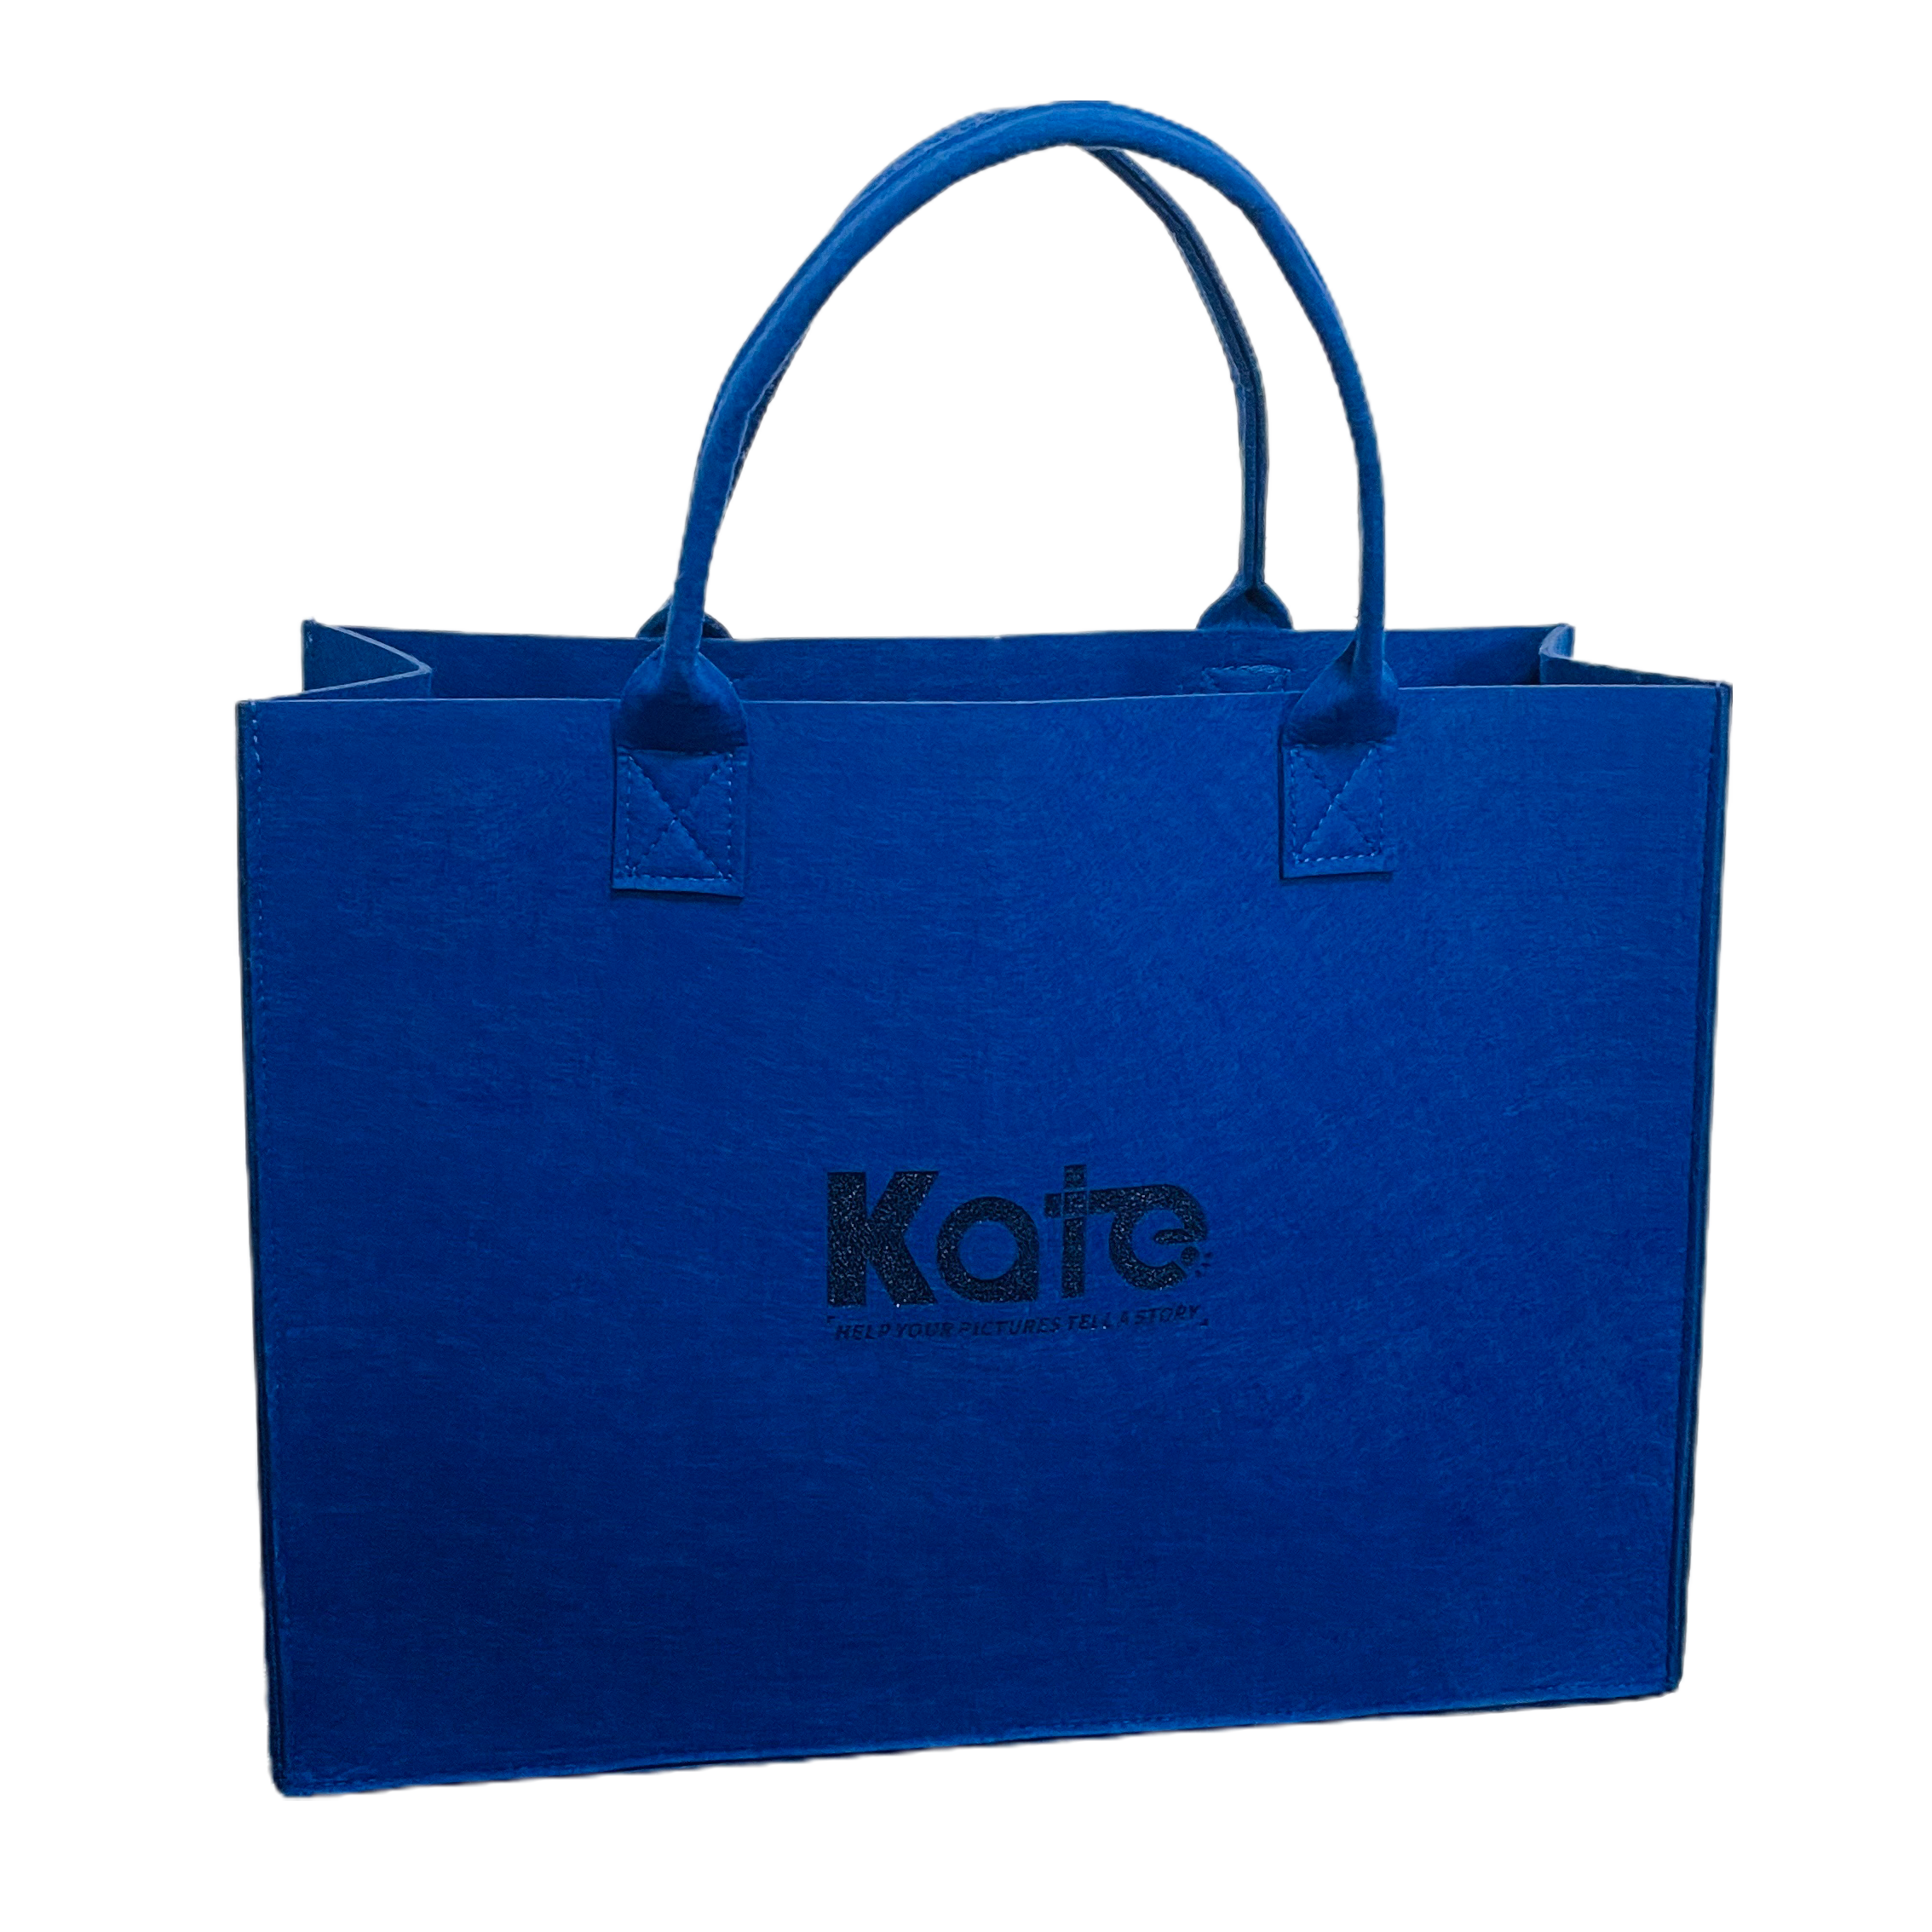 RTS Kate 38x28x15cm Felt Tote Bag